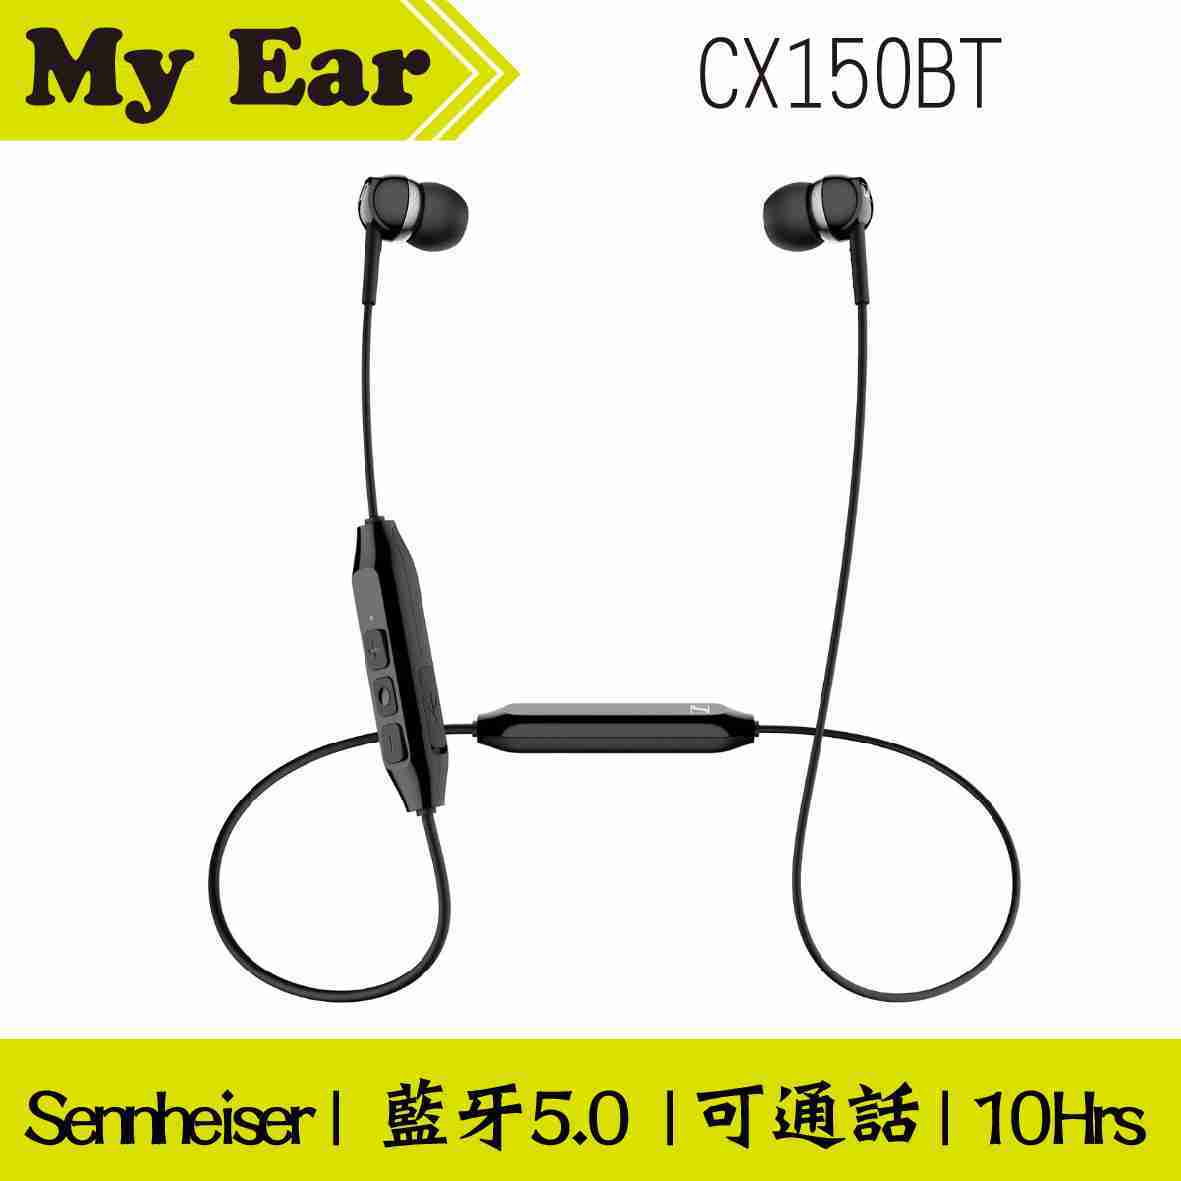 Sennheiser 森海塞爾 CX150BT 白色 藍牙 耳道式 耳機 | My Ear耳機專門店